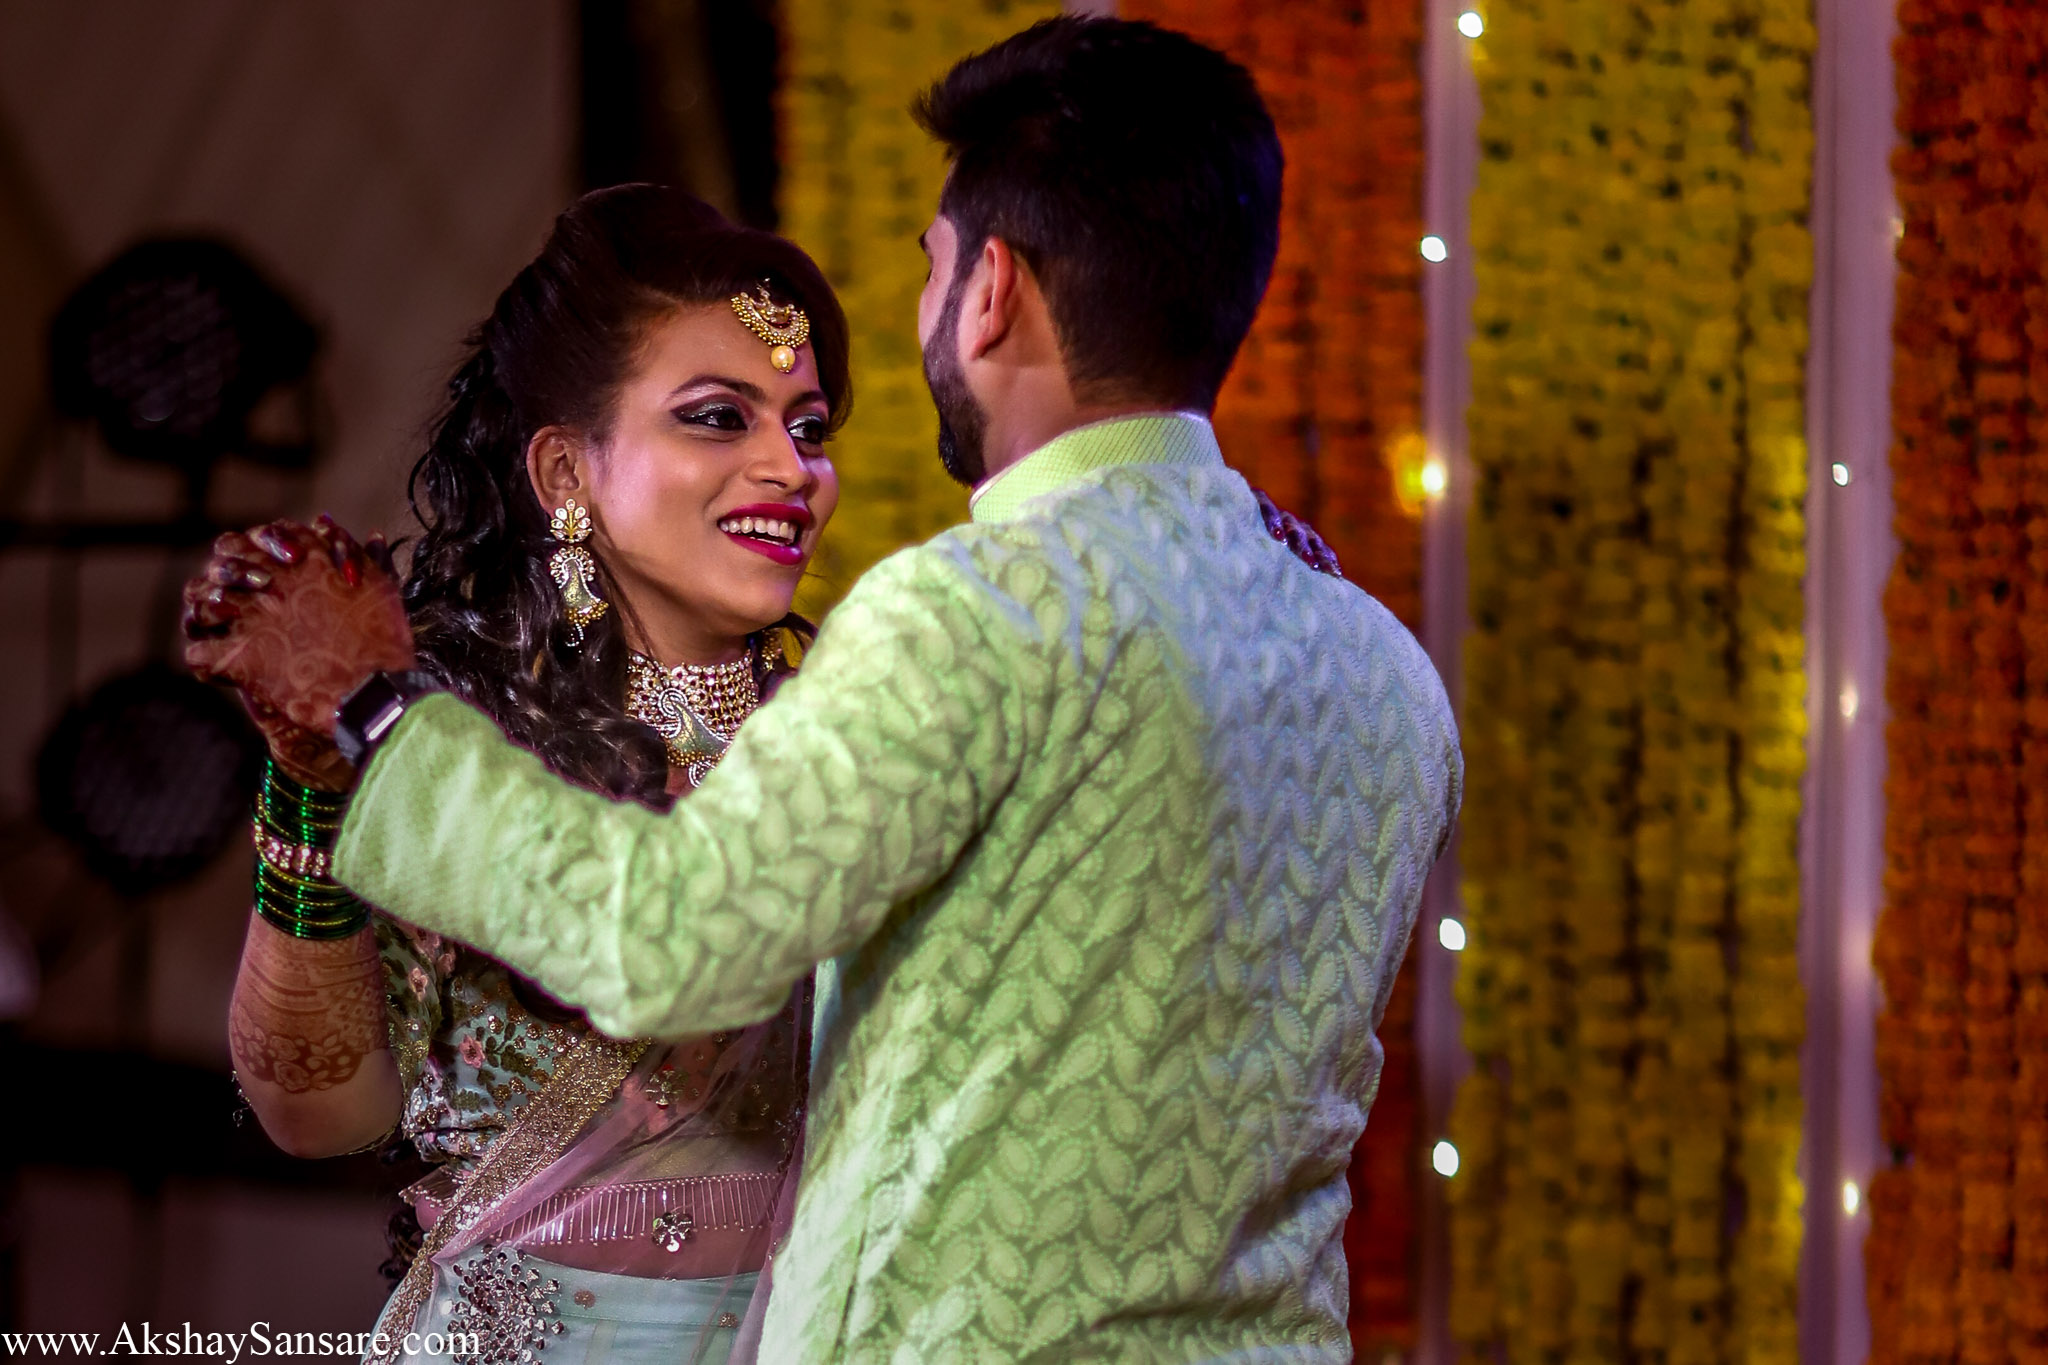 Ajay & Devika Akshay Sansare Photography Best Candid wedding photographer in mumbai india36.jpg